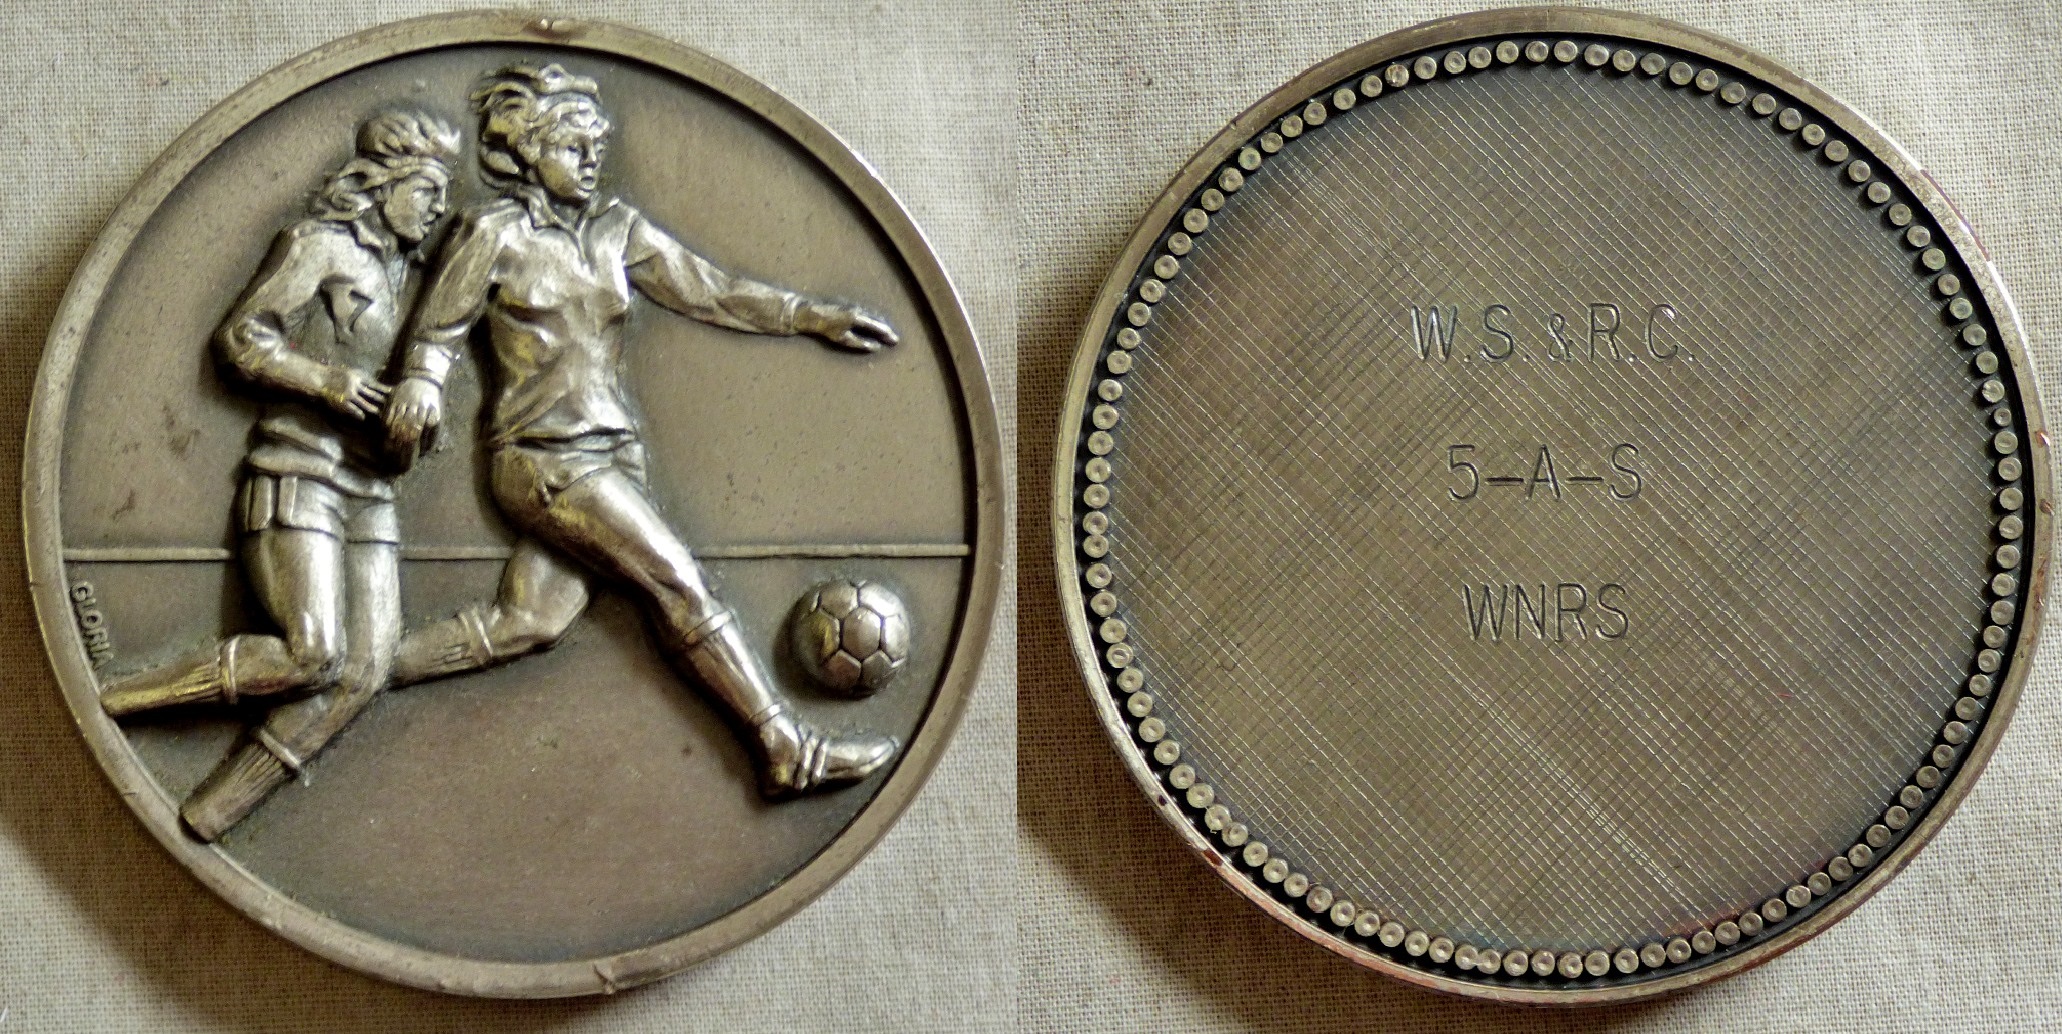 Football Medallion-WS &RC-5-A-S-WNRS